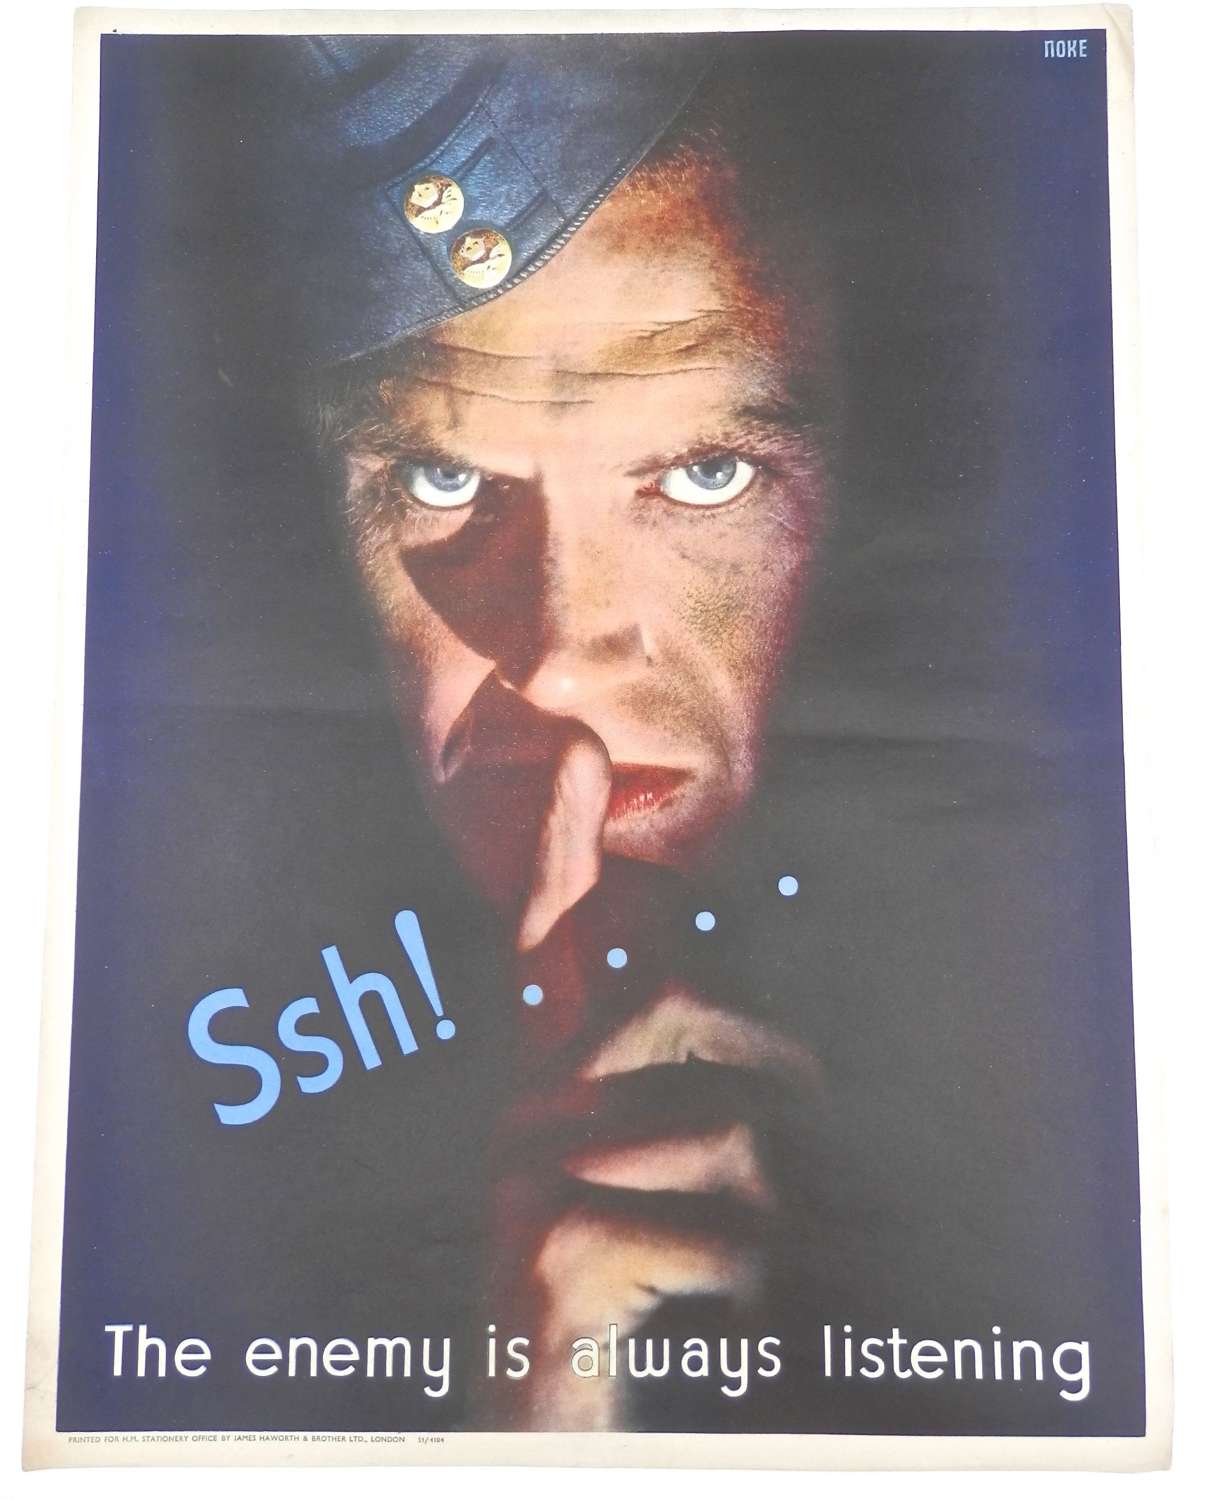 RAF original wartime careless talk poster